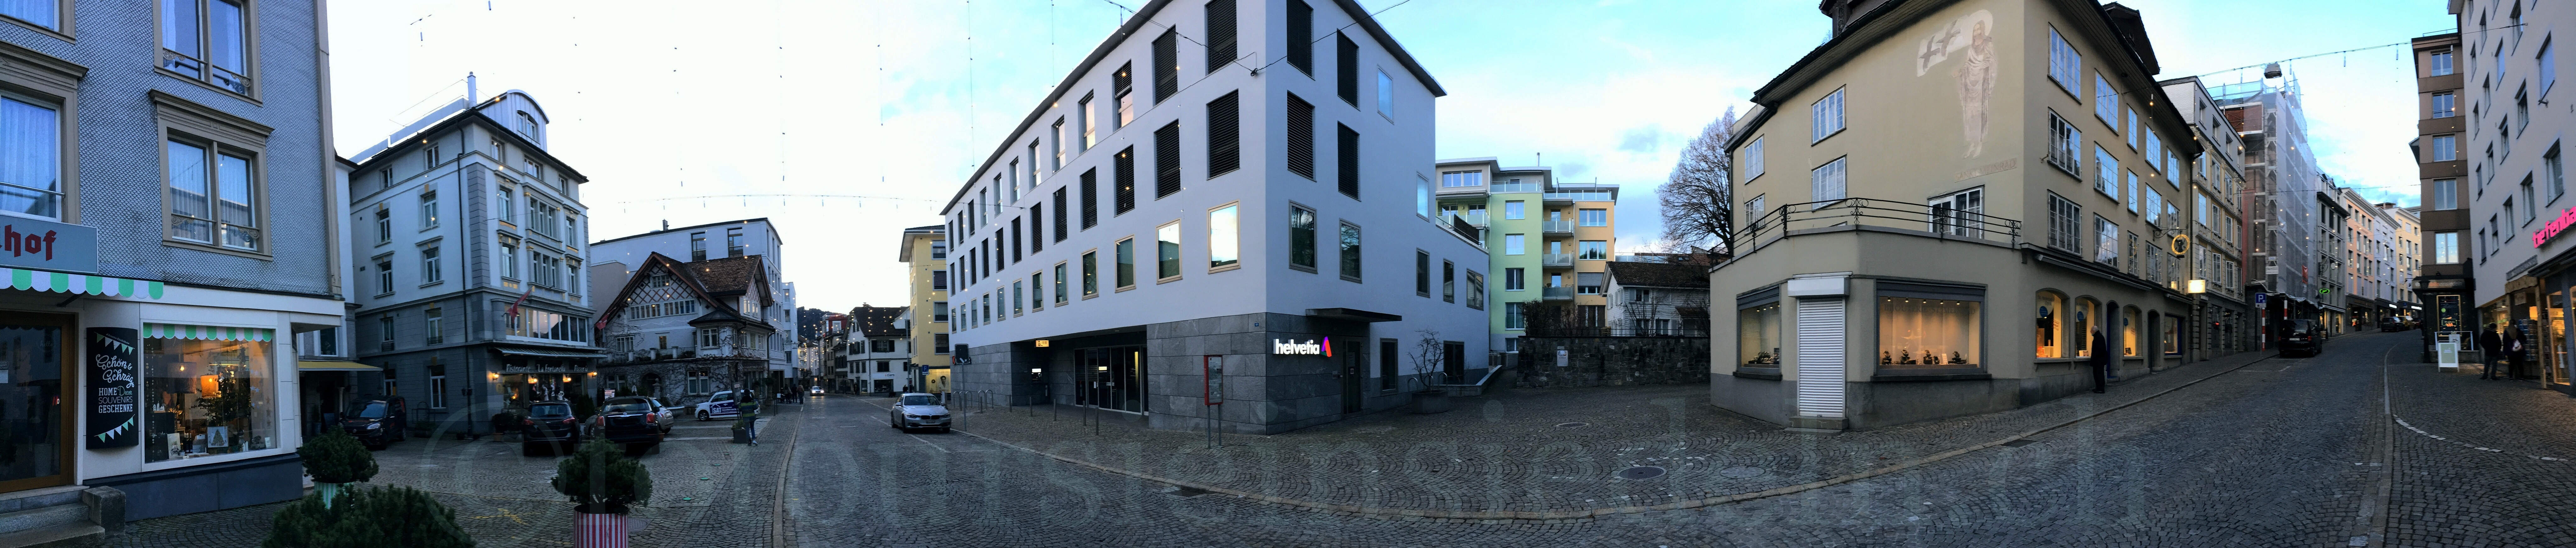 Panorama Einsiedeln 2020 051